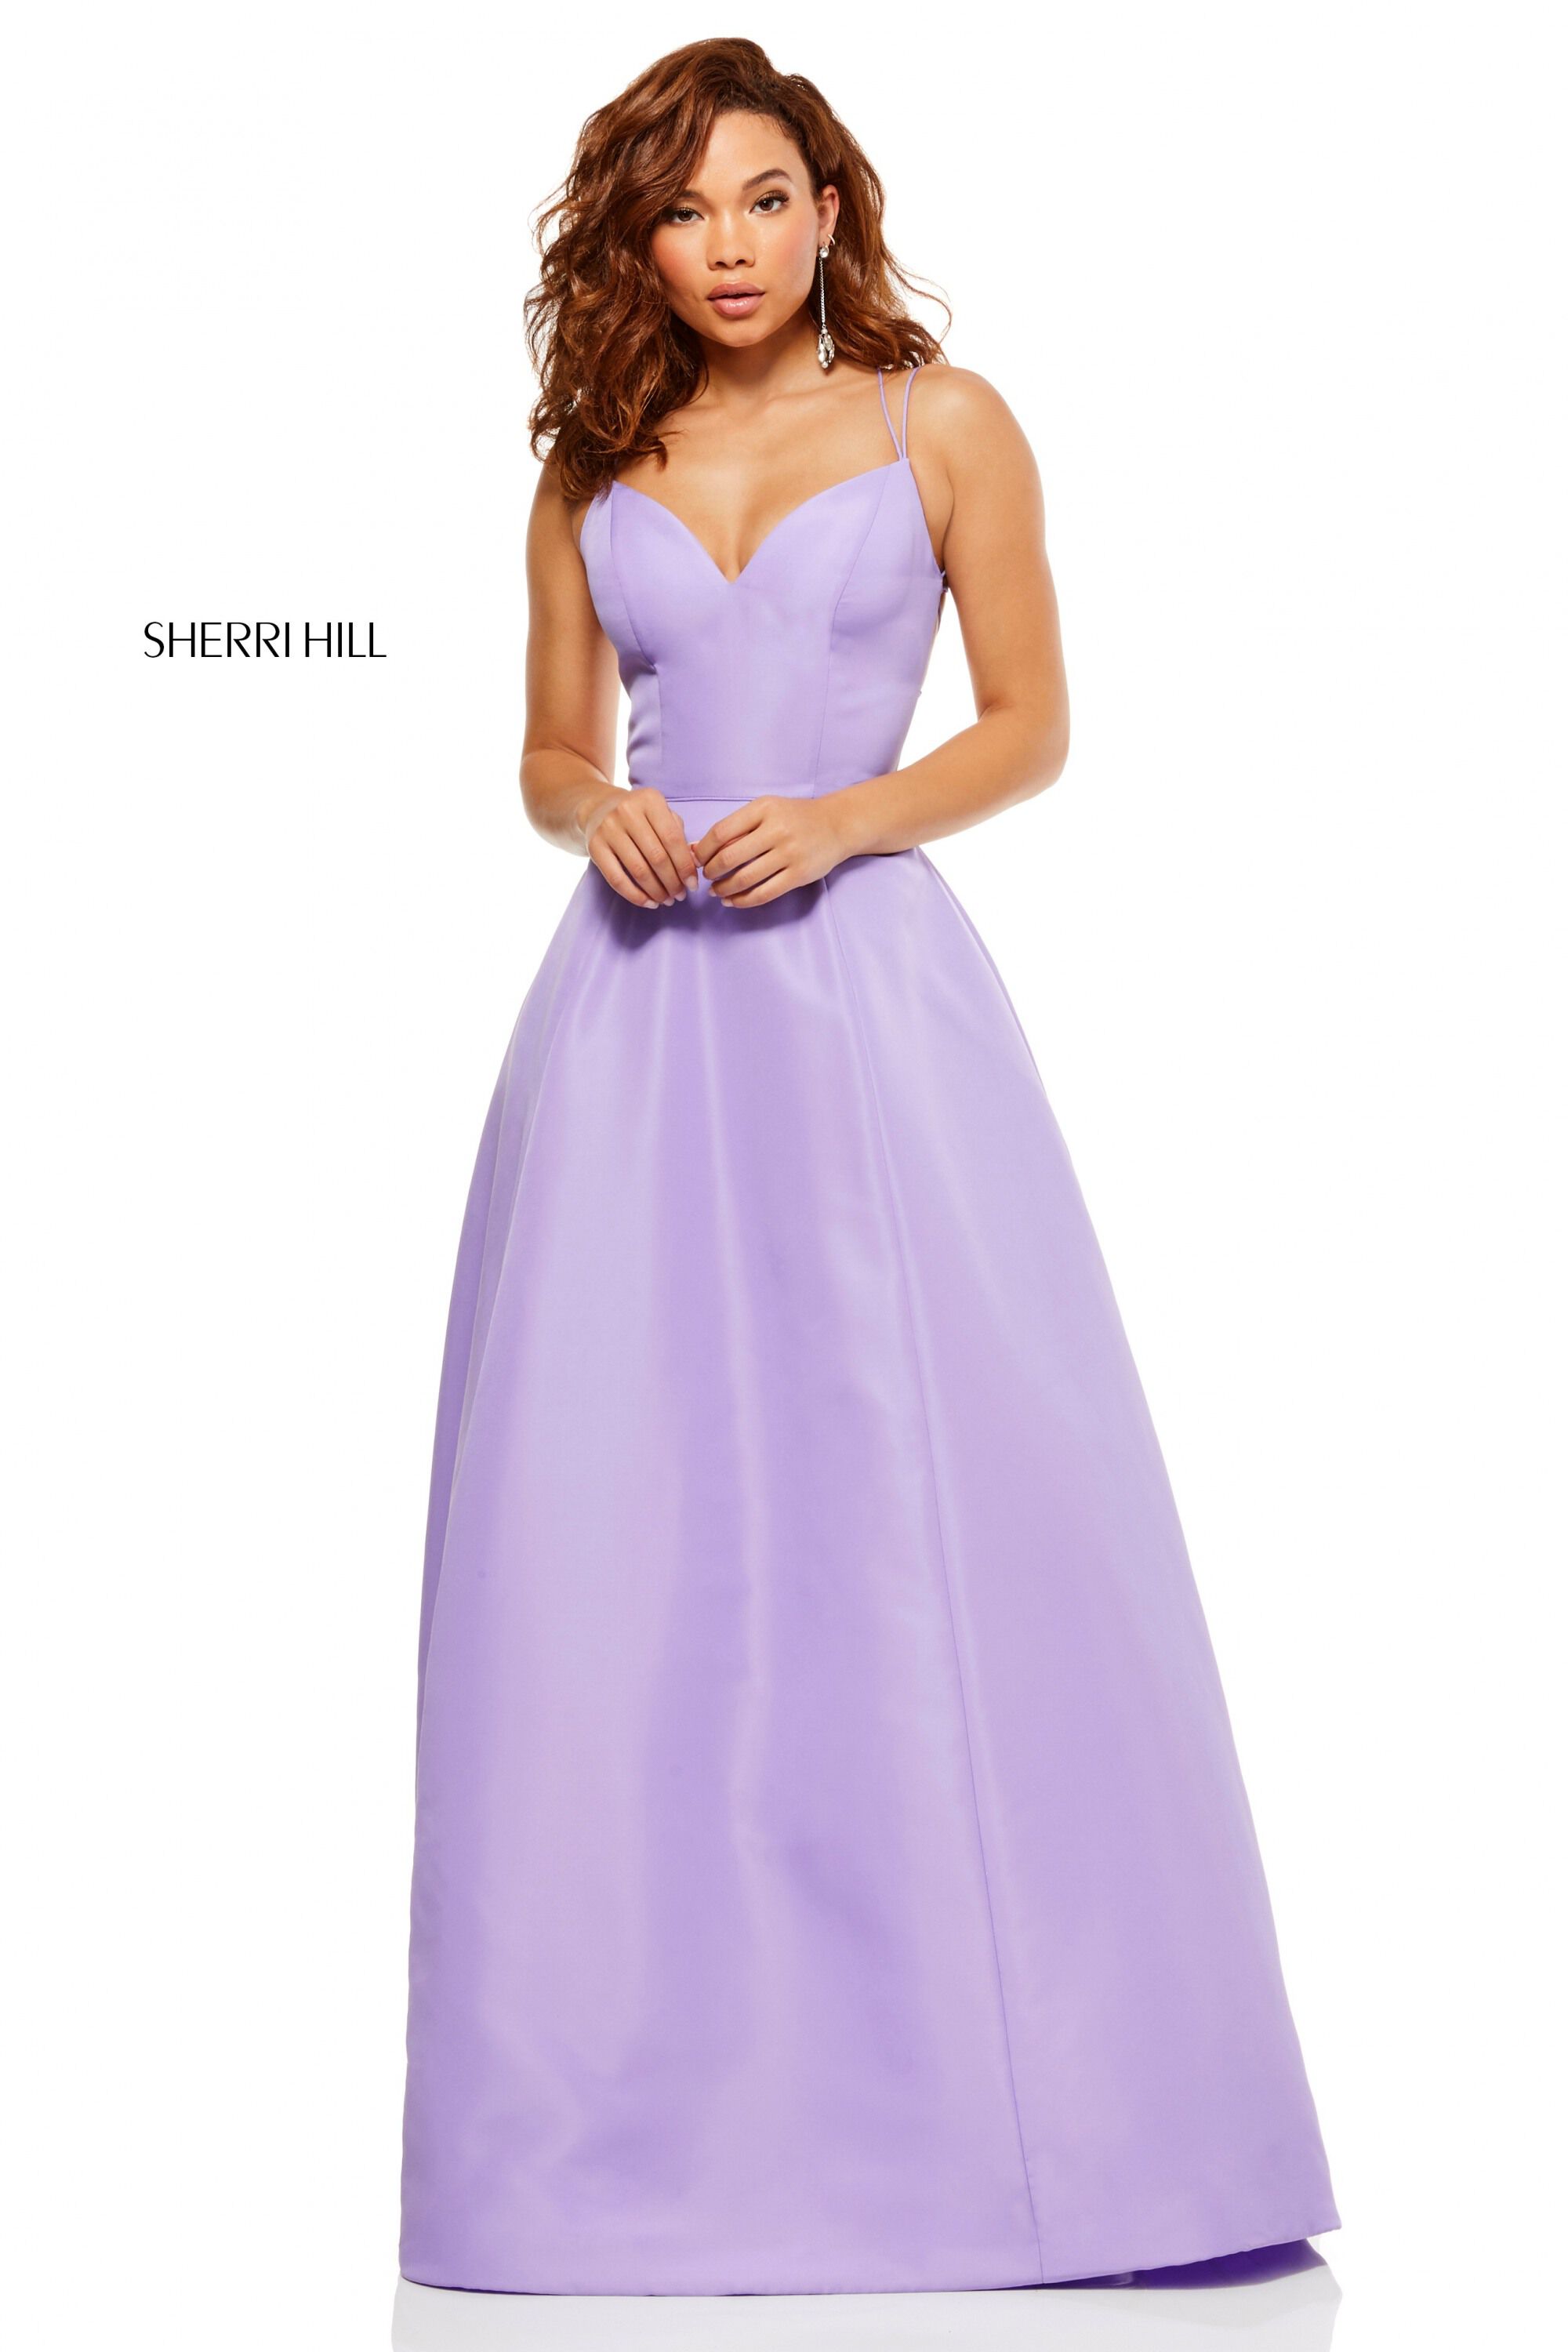 Buy dress style № 52495 designed by SherriHill